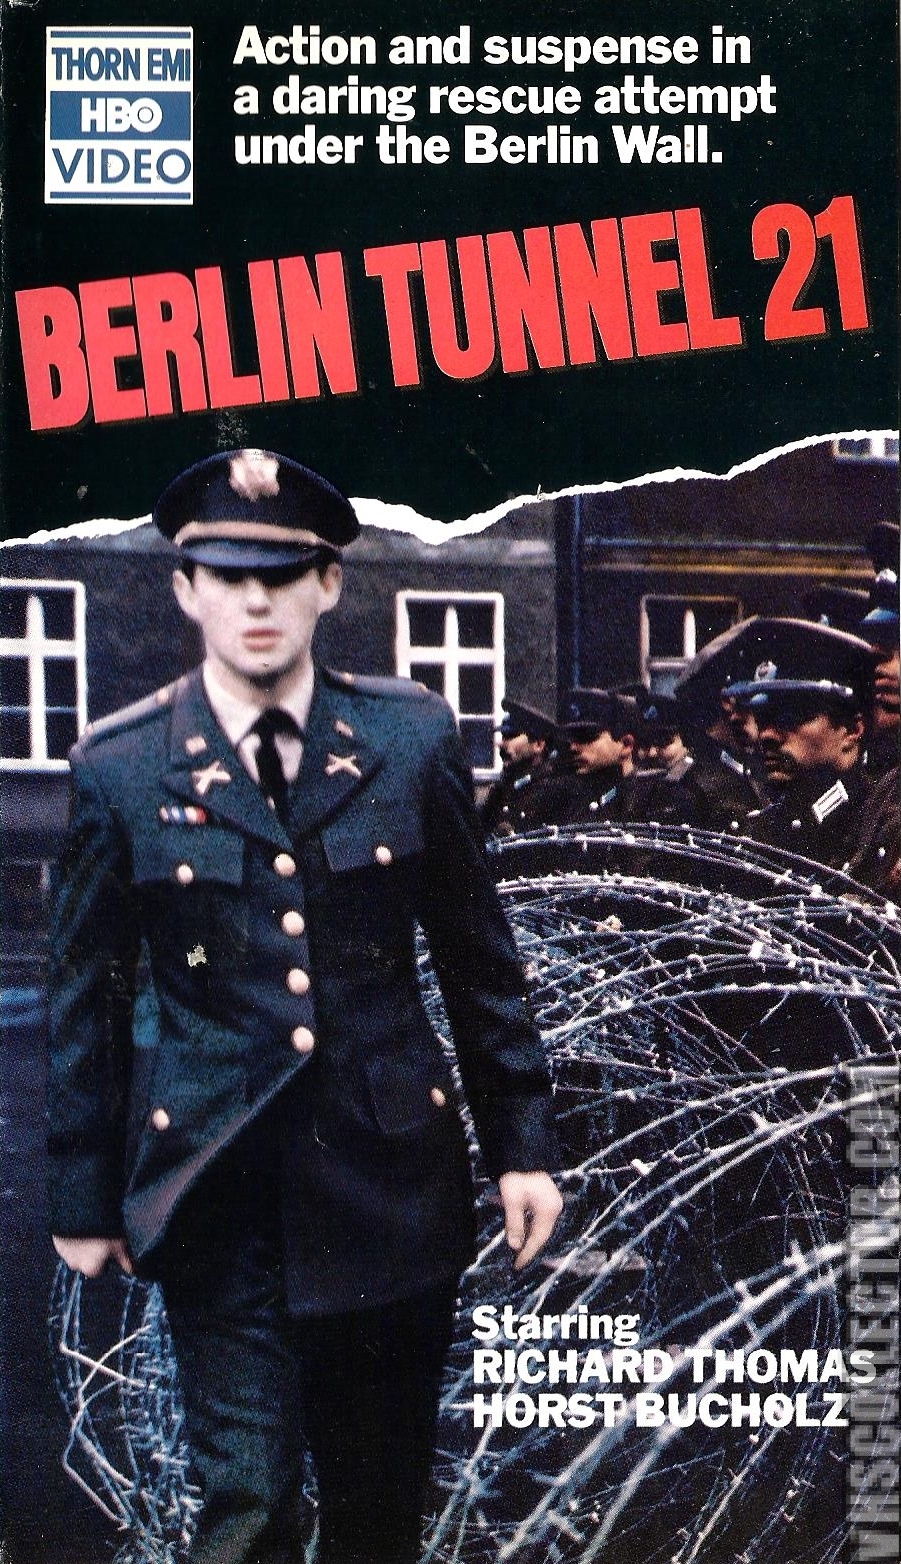 Berlin Tunnel 21 (1981) Screenshot 4